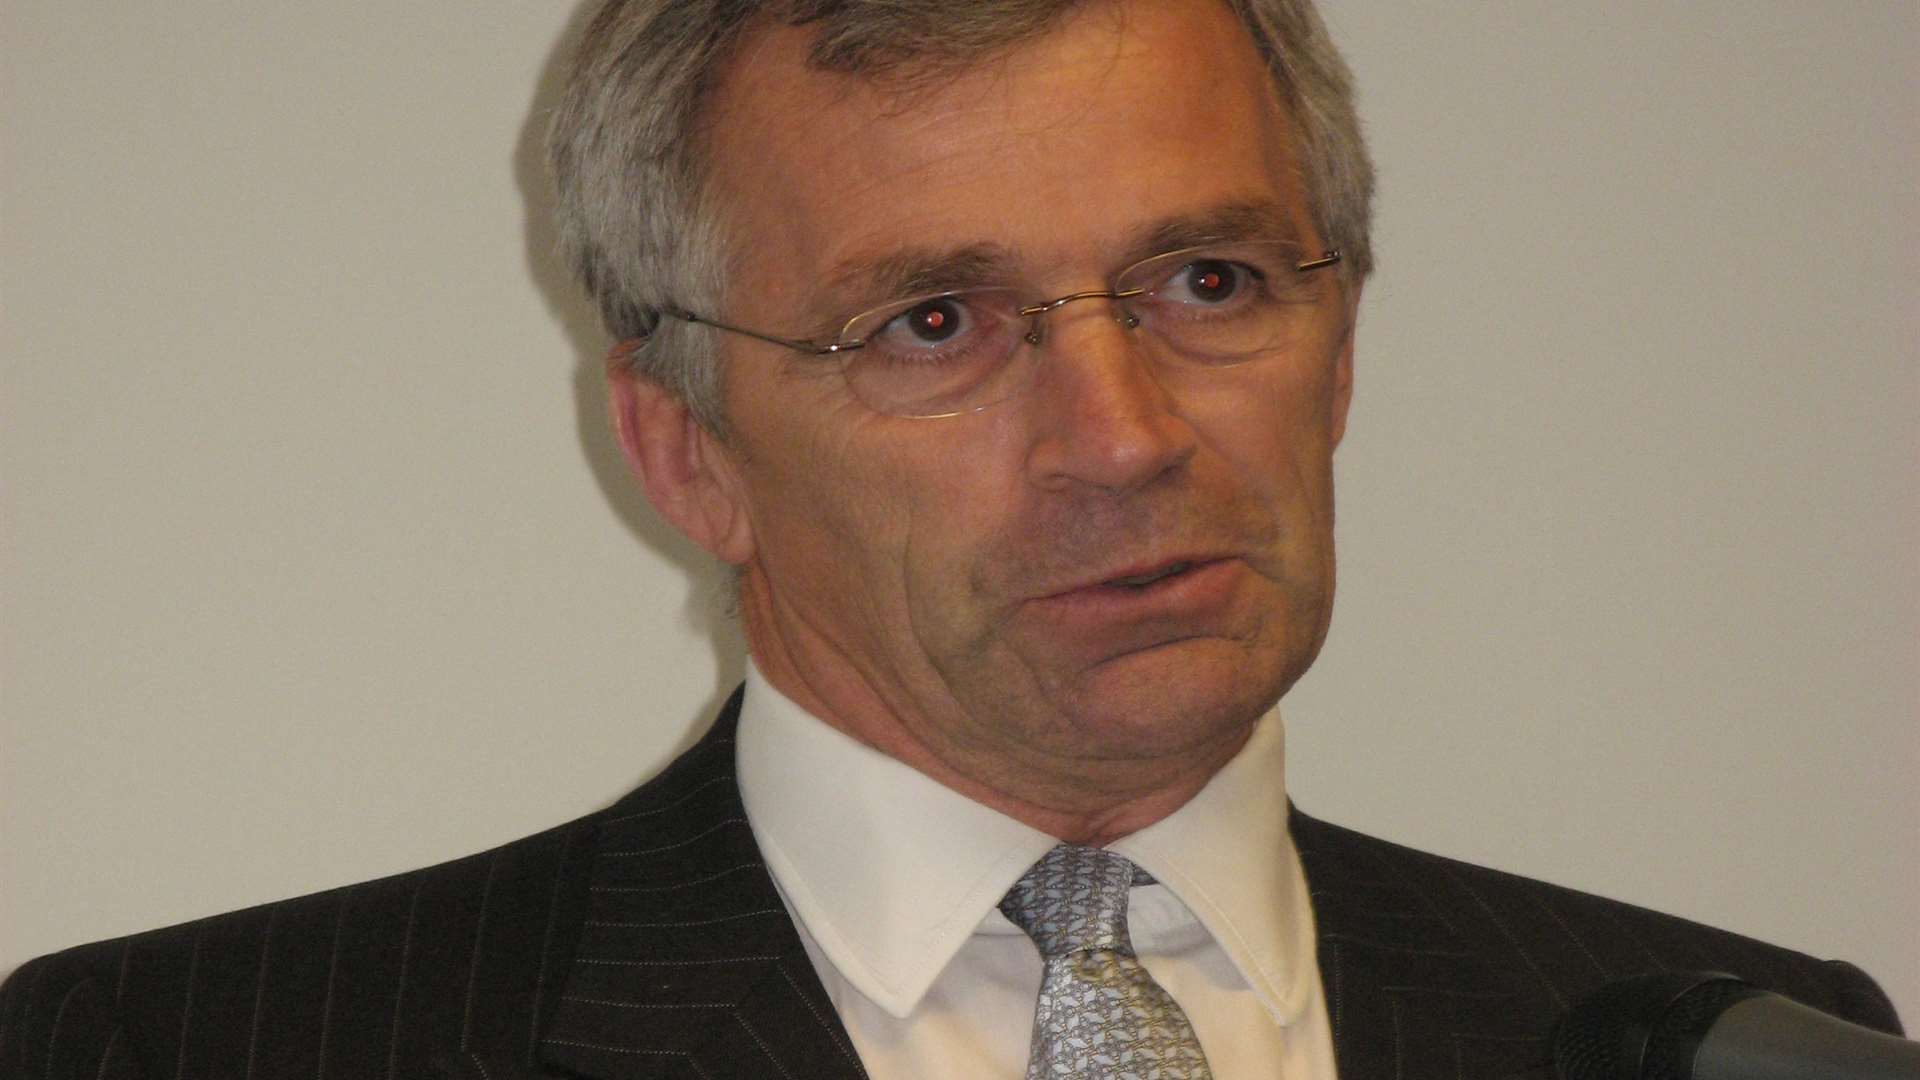 Richard Ashworth MEP